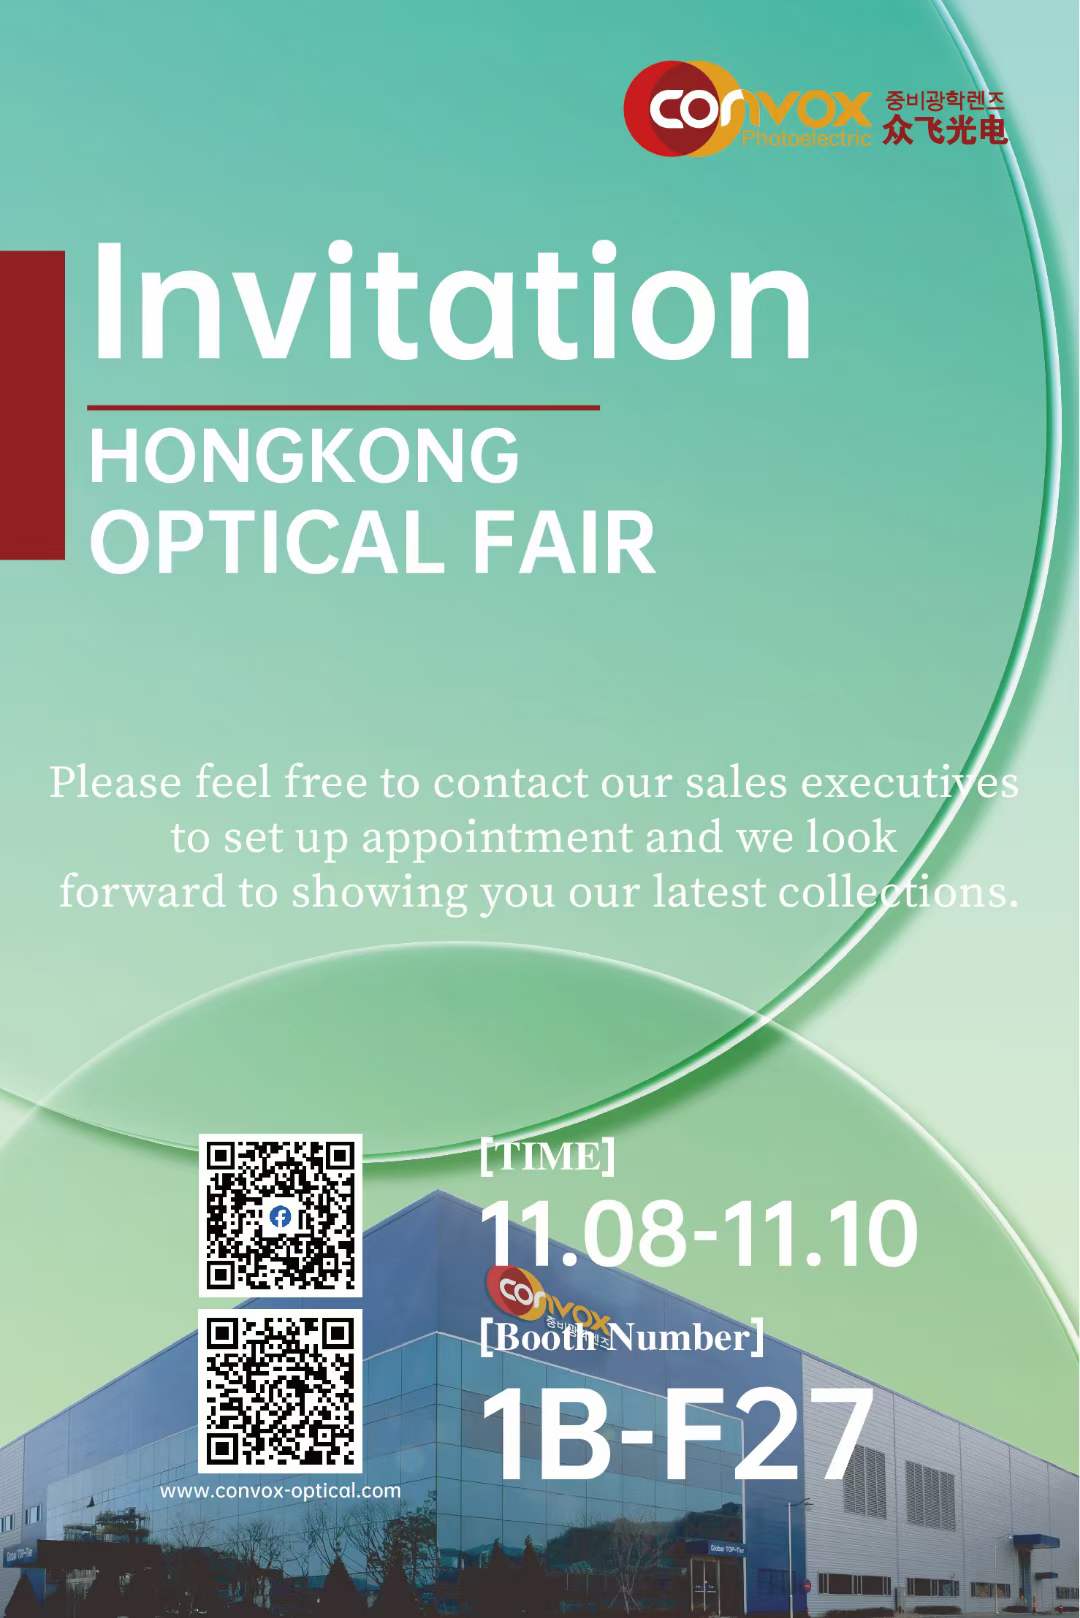 Next Wednesday， Welcome to Hongkong Optical Fair